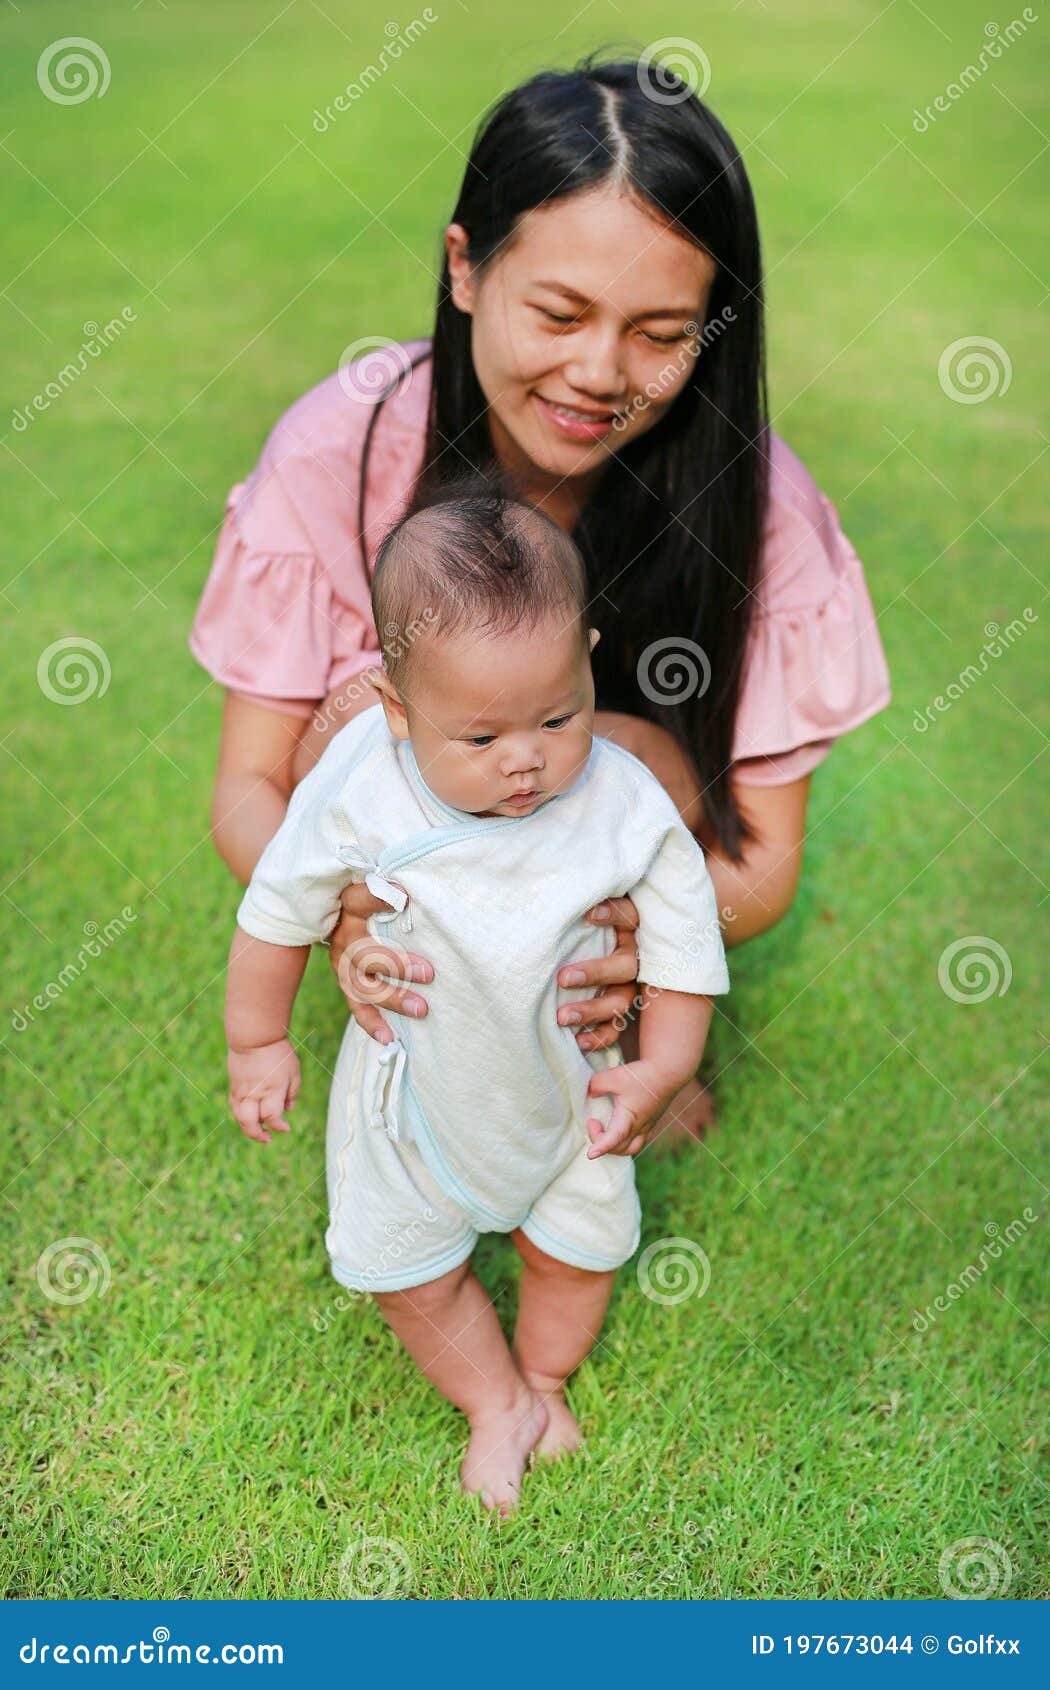 mom practiced her baby boy first step walking on green grass garden